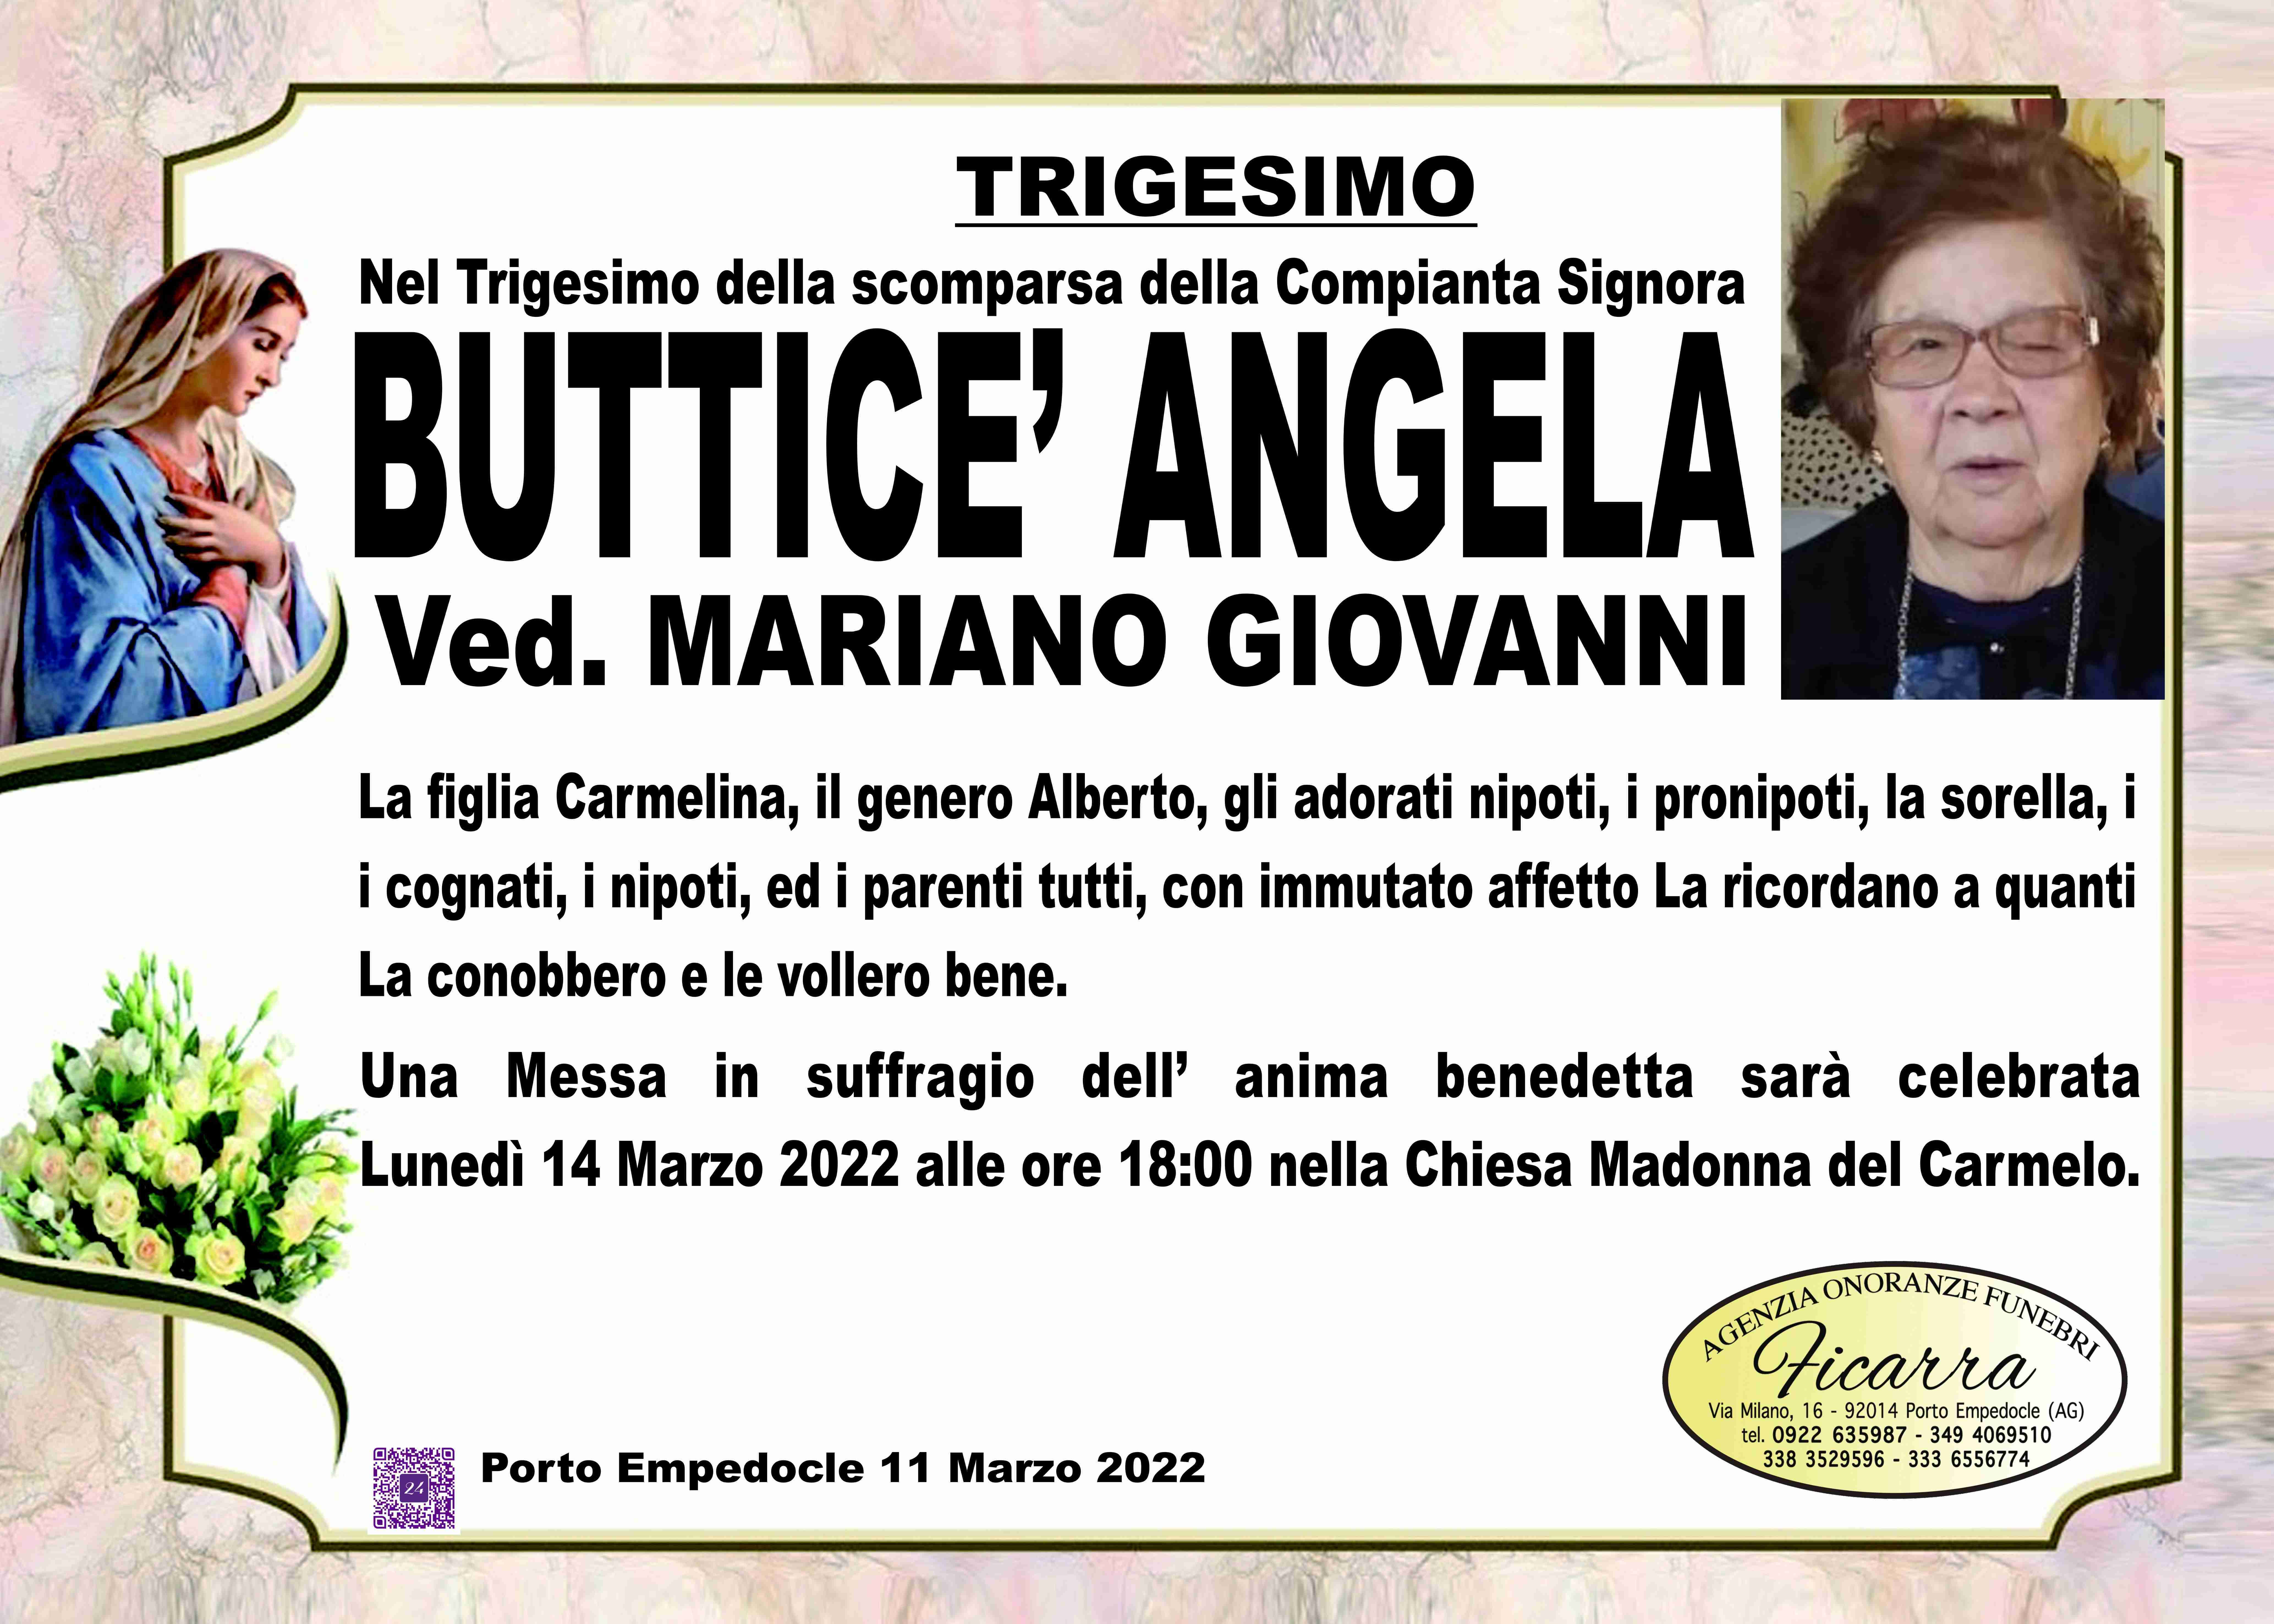 Angela Butticè